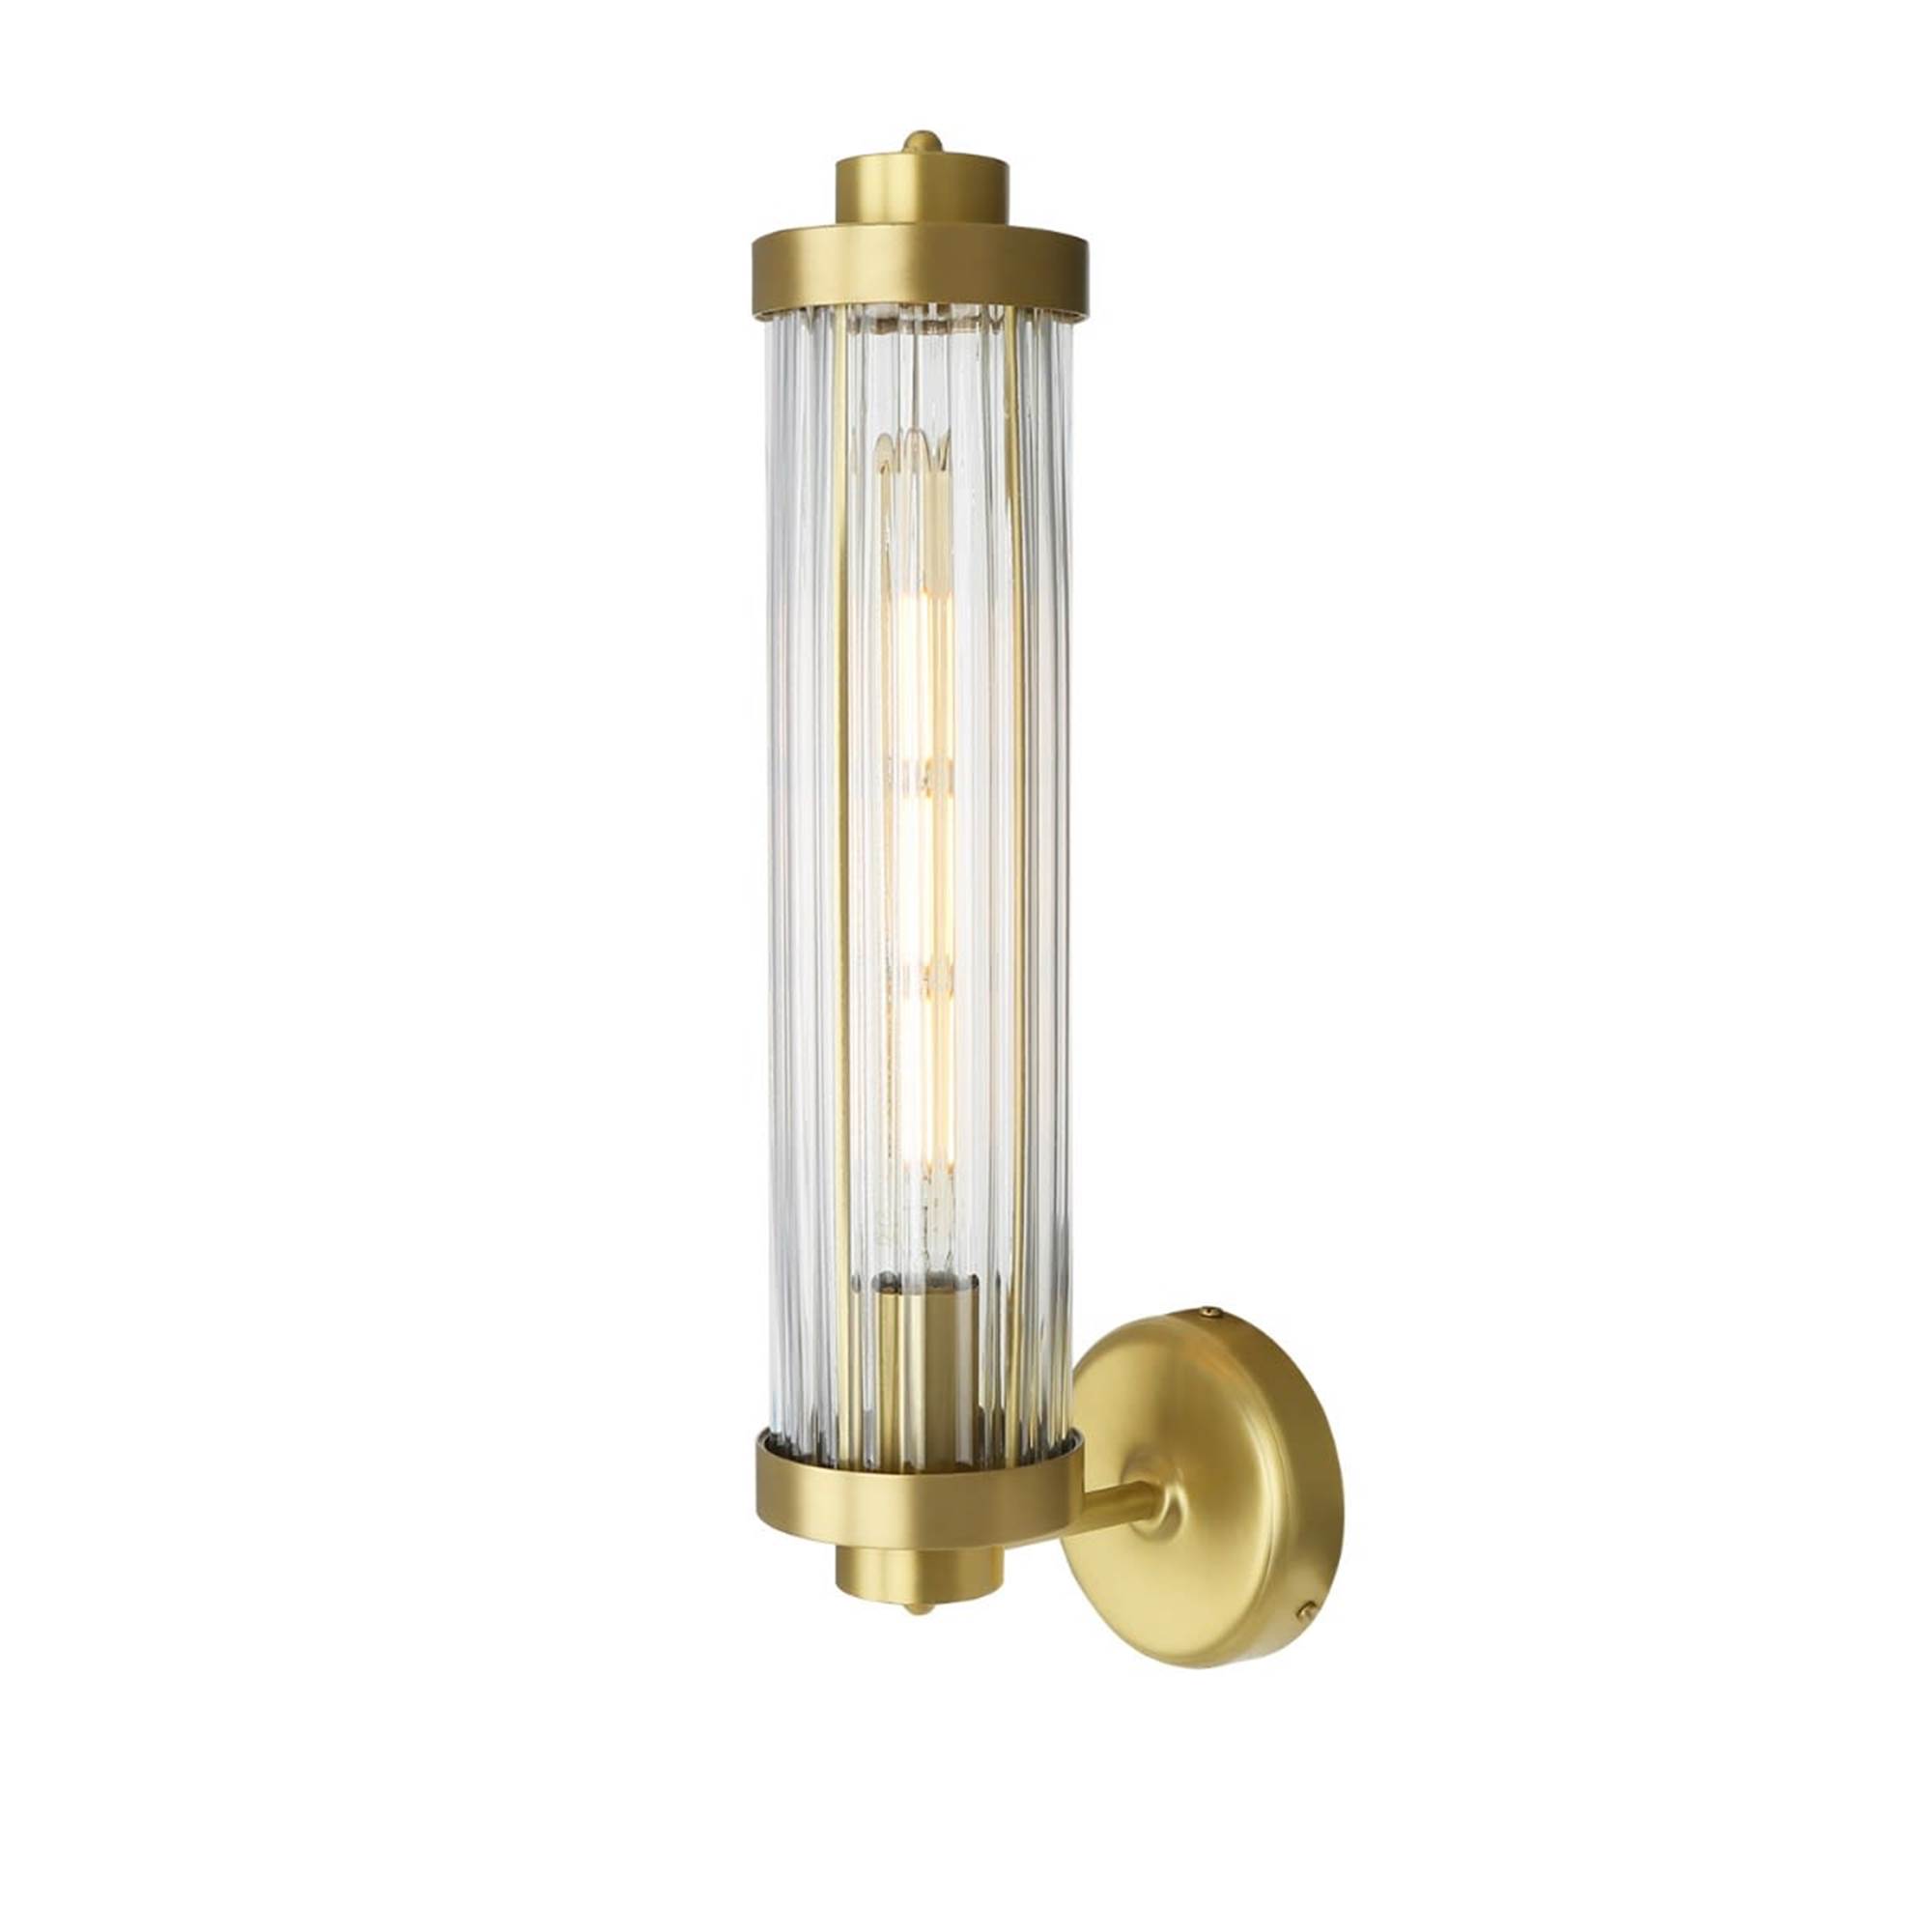 Mullan Lighting Louise Wall Light with Rippled Glass - Satin Brass